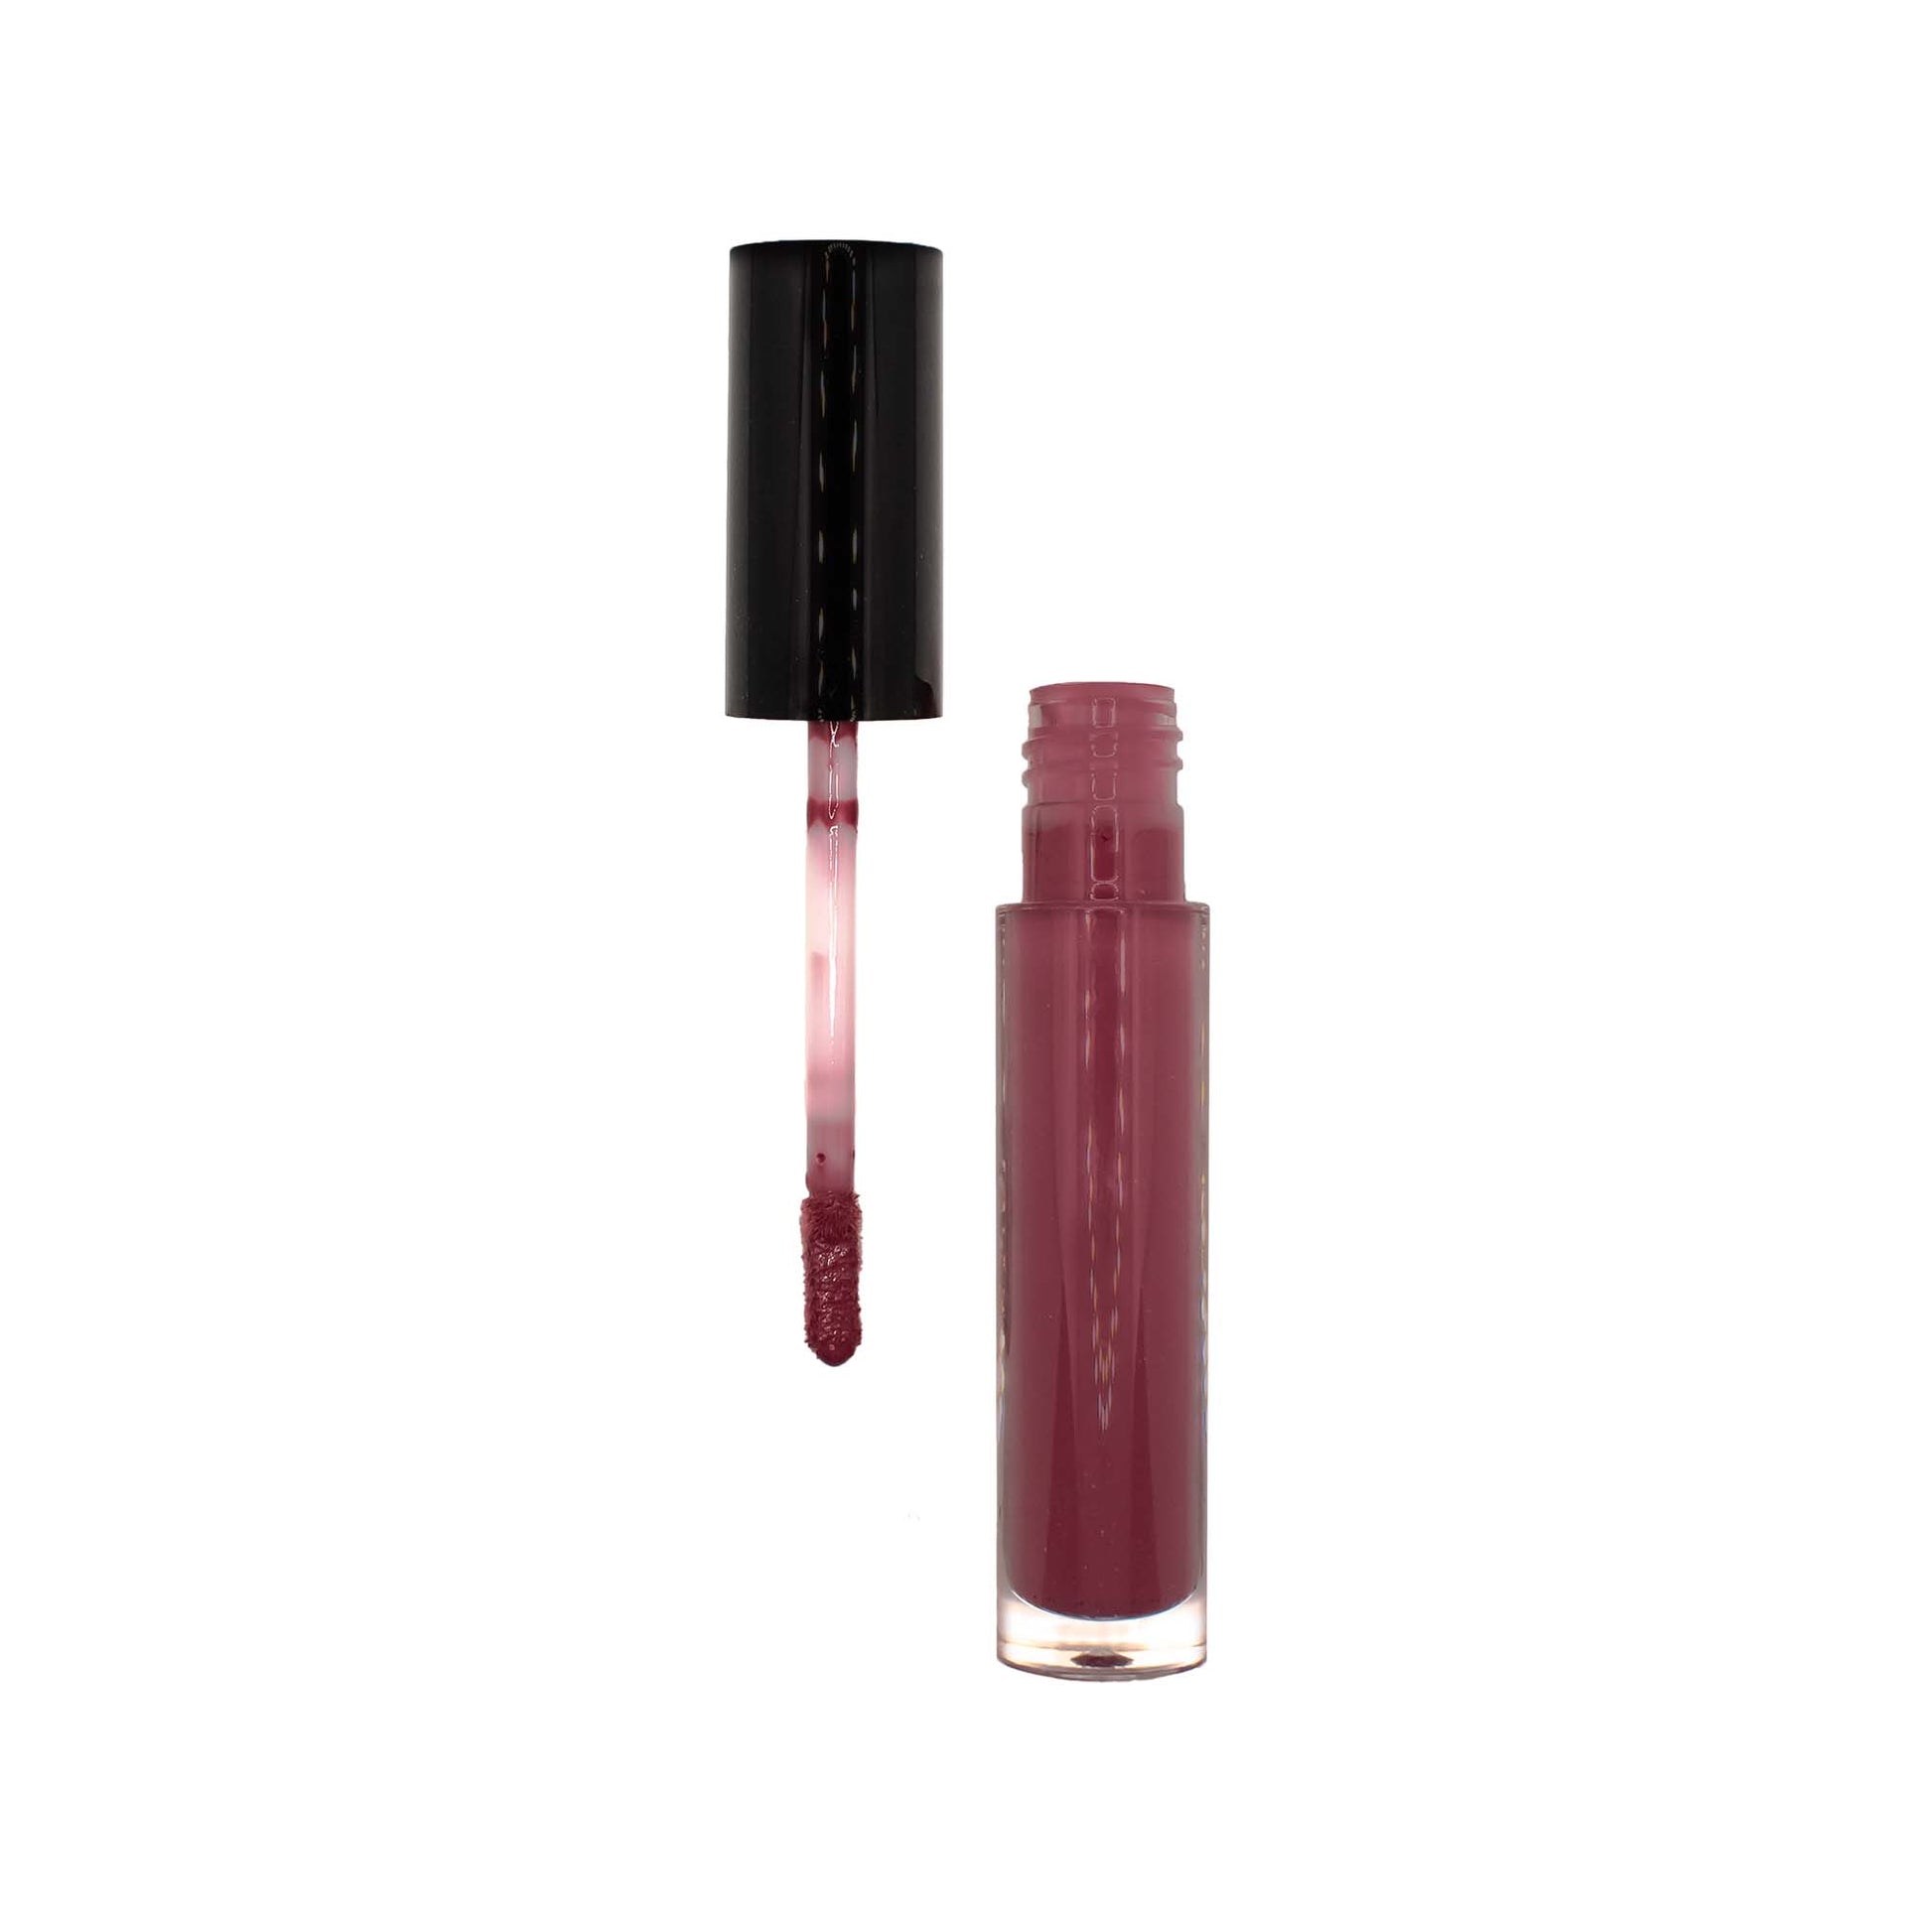 Poutastic Liquid Lip Gloss - Coral | Sheer Tint for Fuller Lips, 5 mL / 0.17 fl oz 